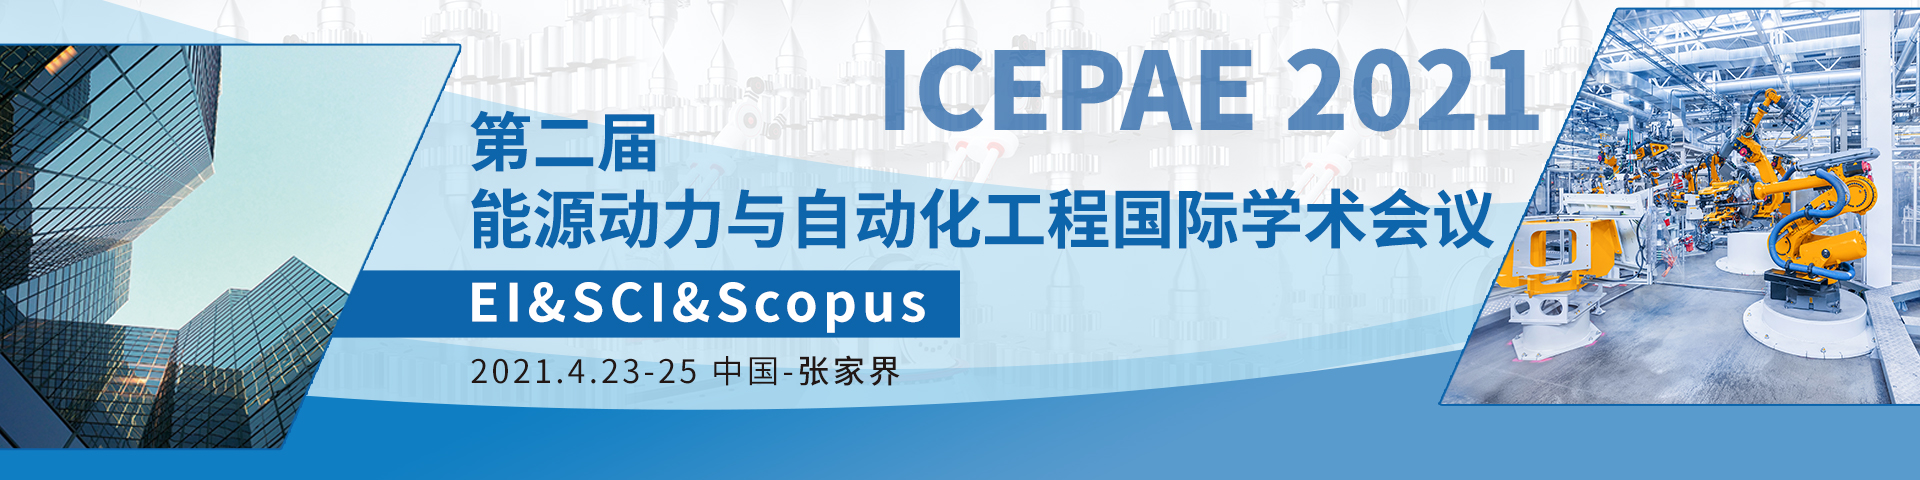 ICEPAE 2021-艾思-何霞丽-1021.jpg